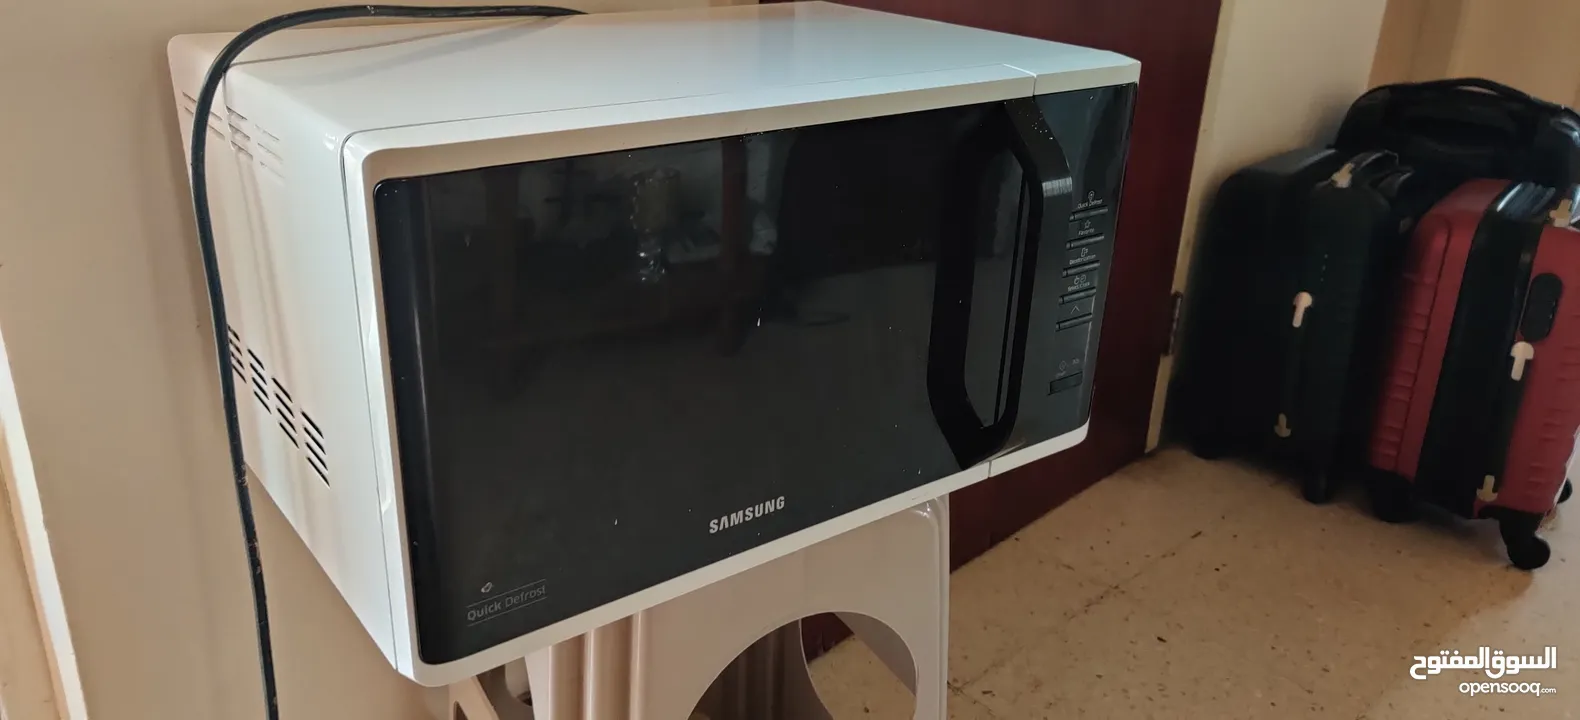 Microwave - Samsung